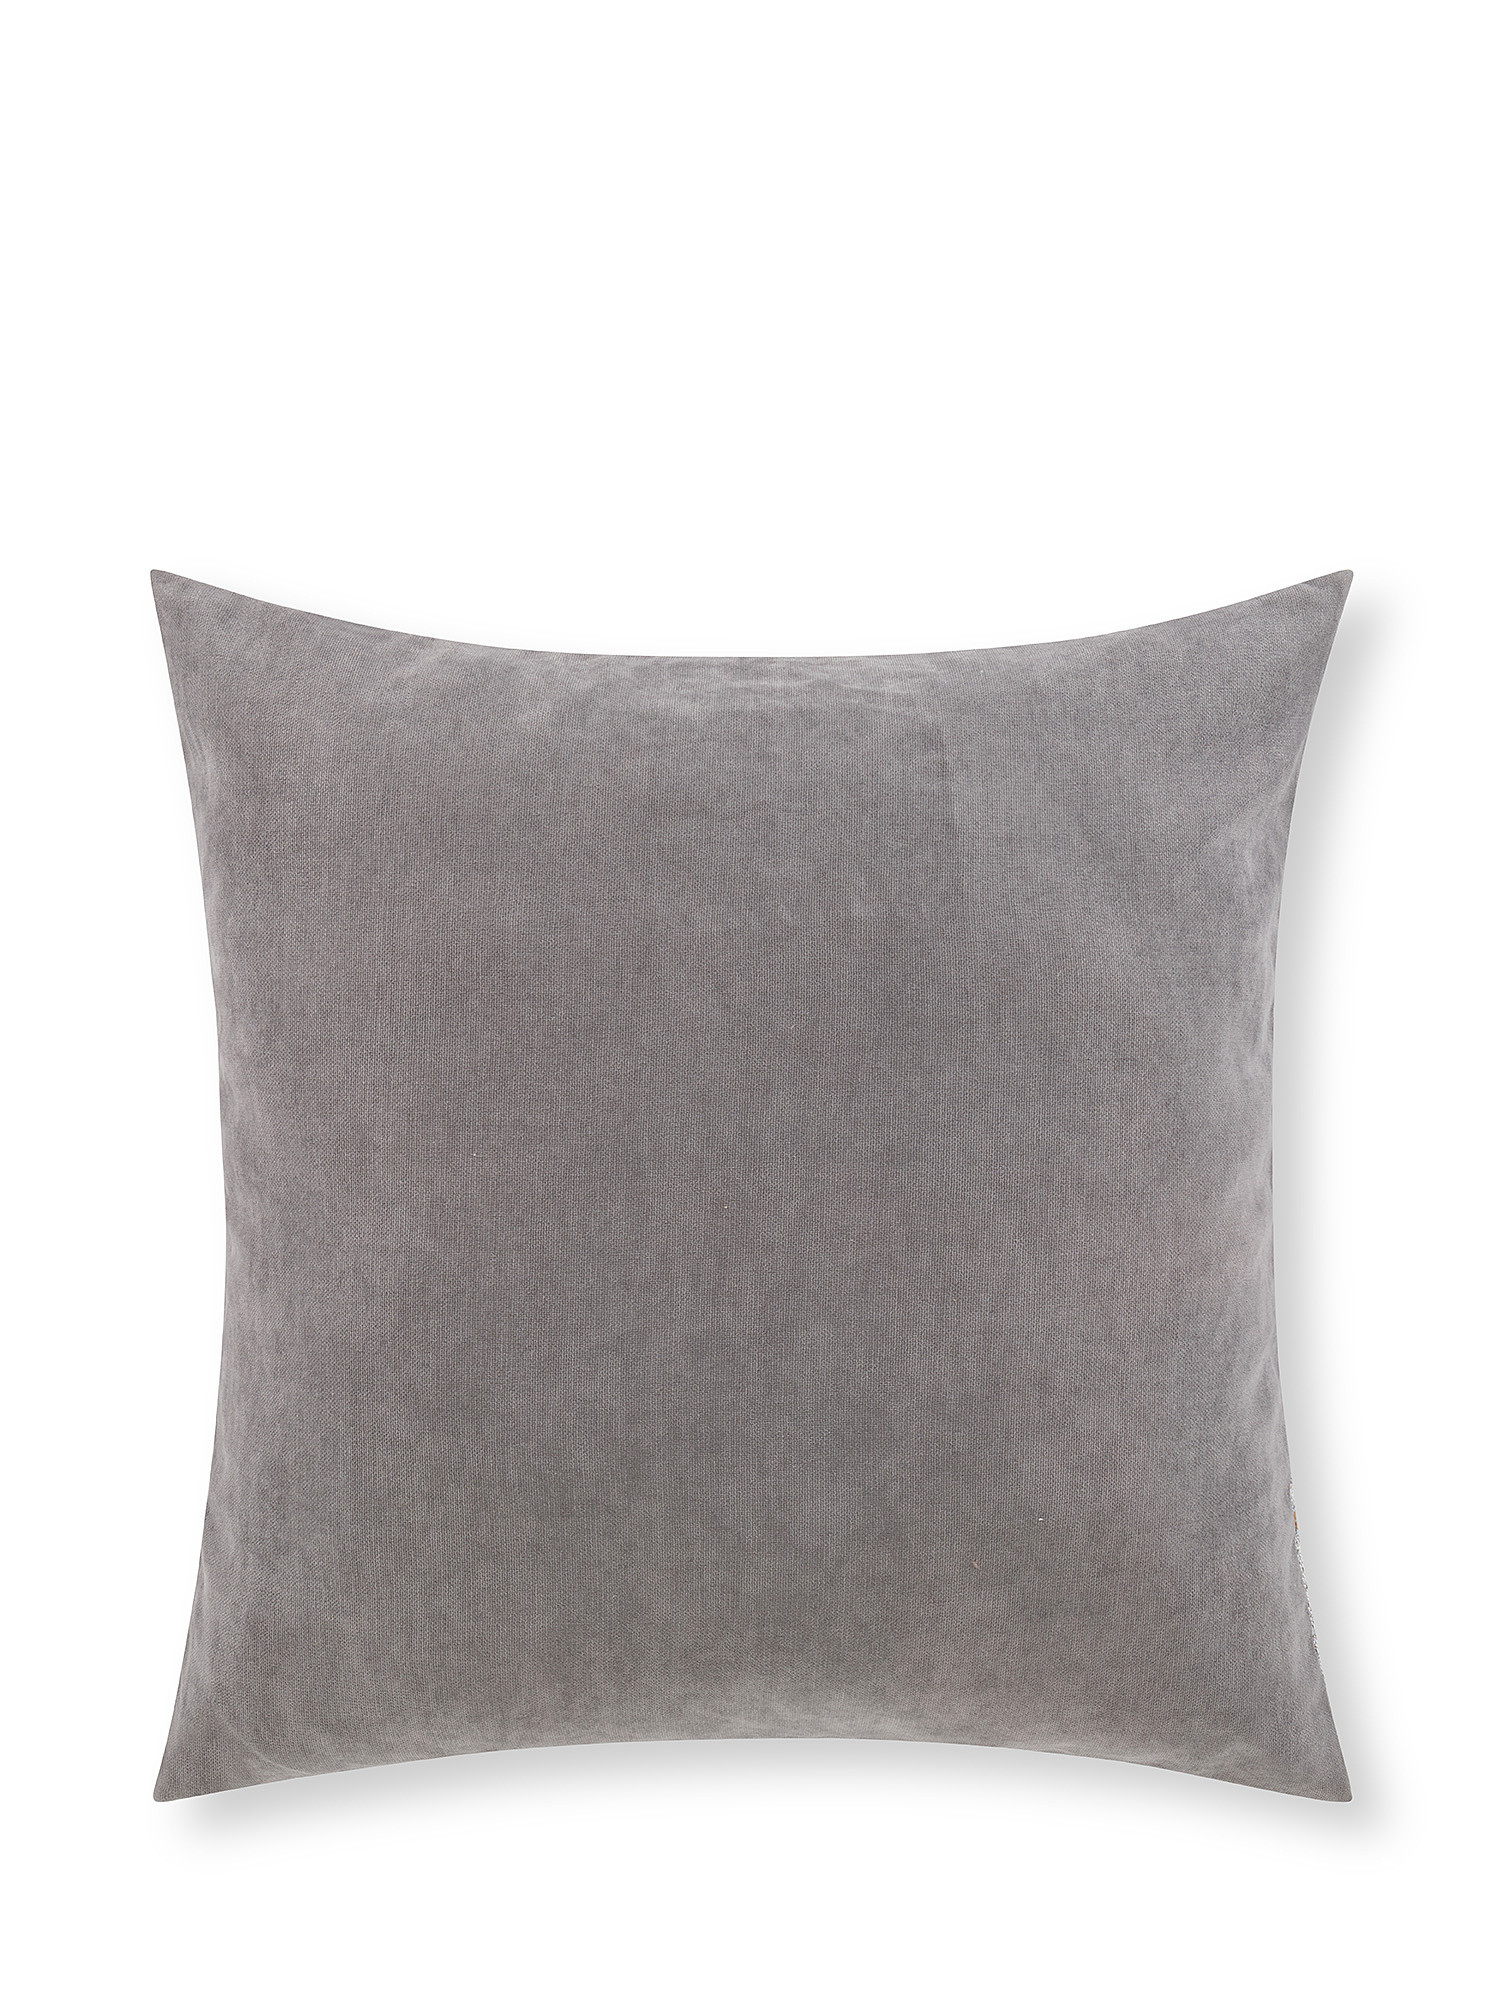 Jacquard cushion with ramage motif 45x45cm, Beige, large image number 1